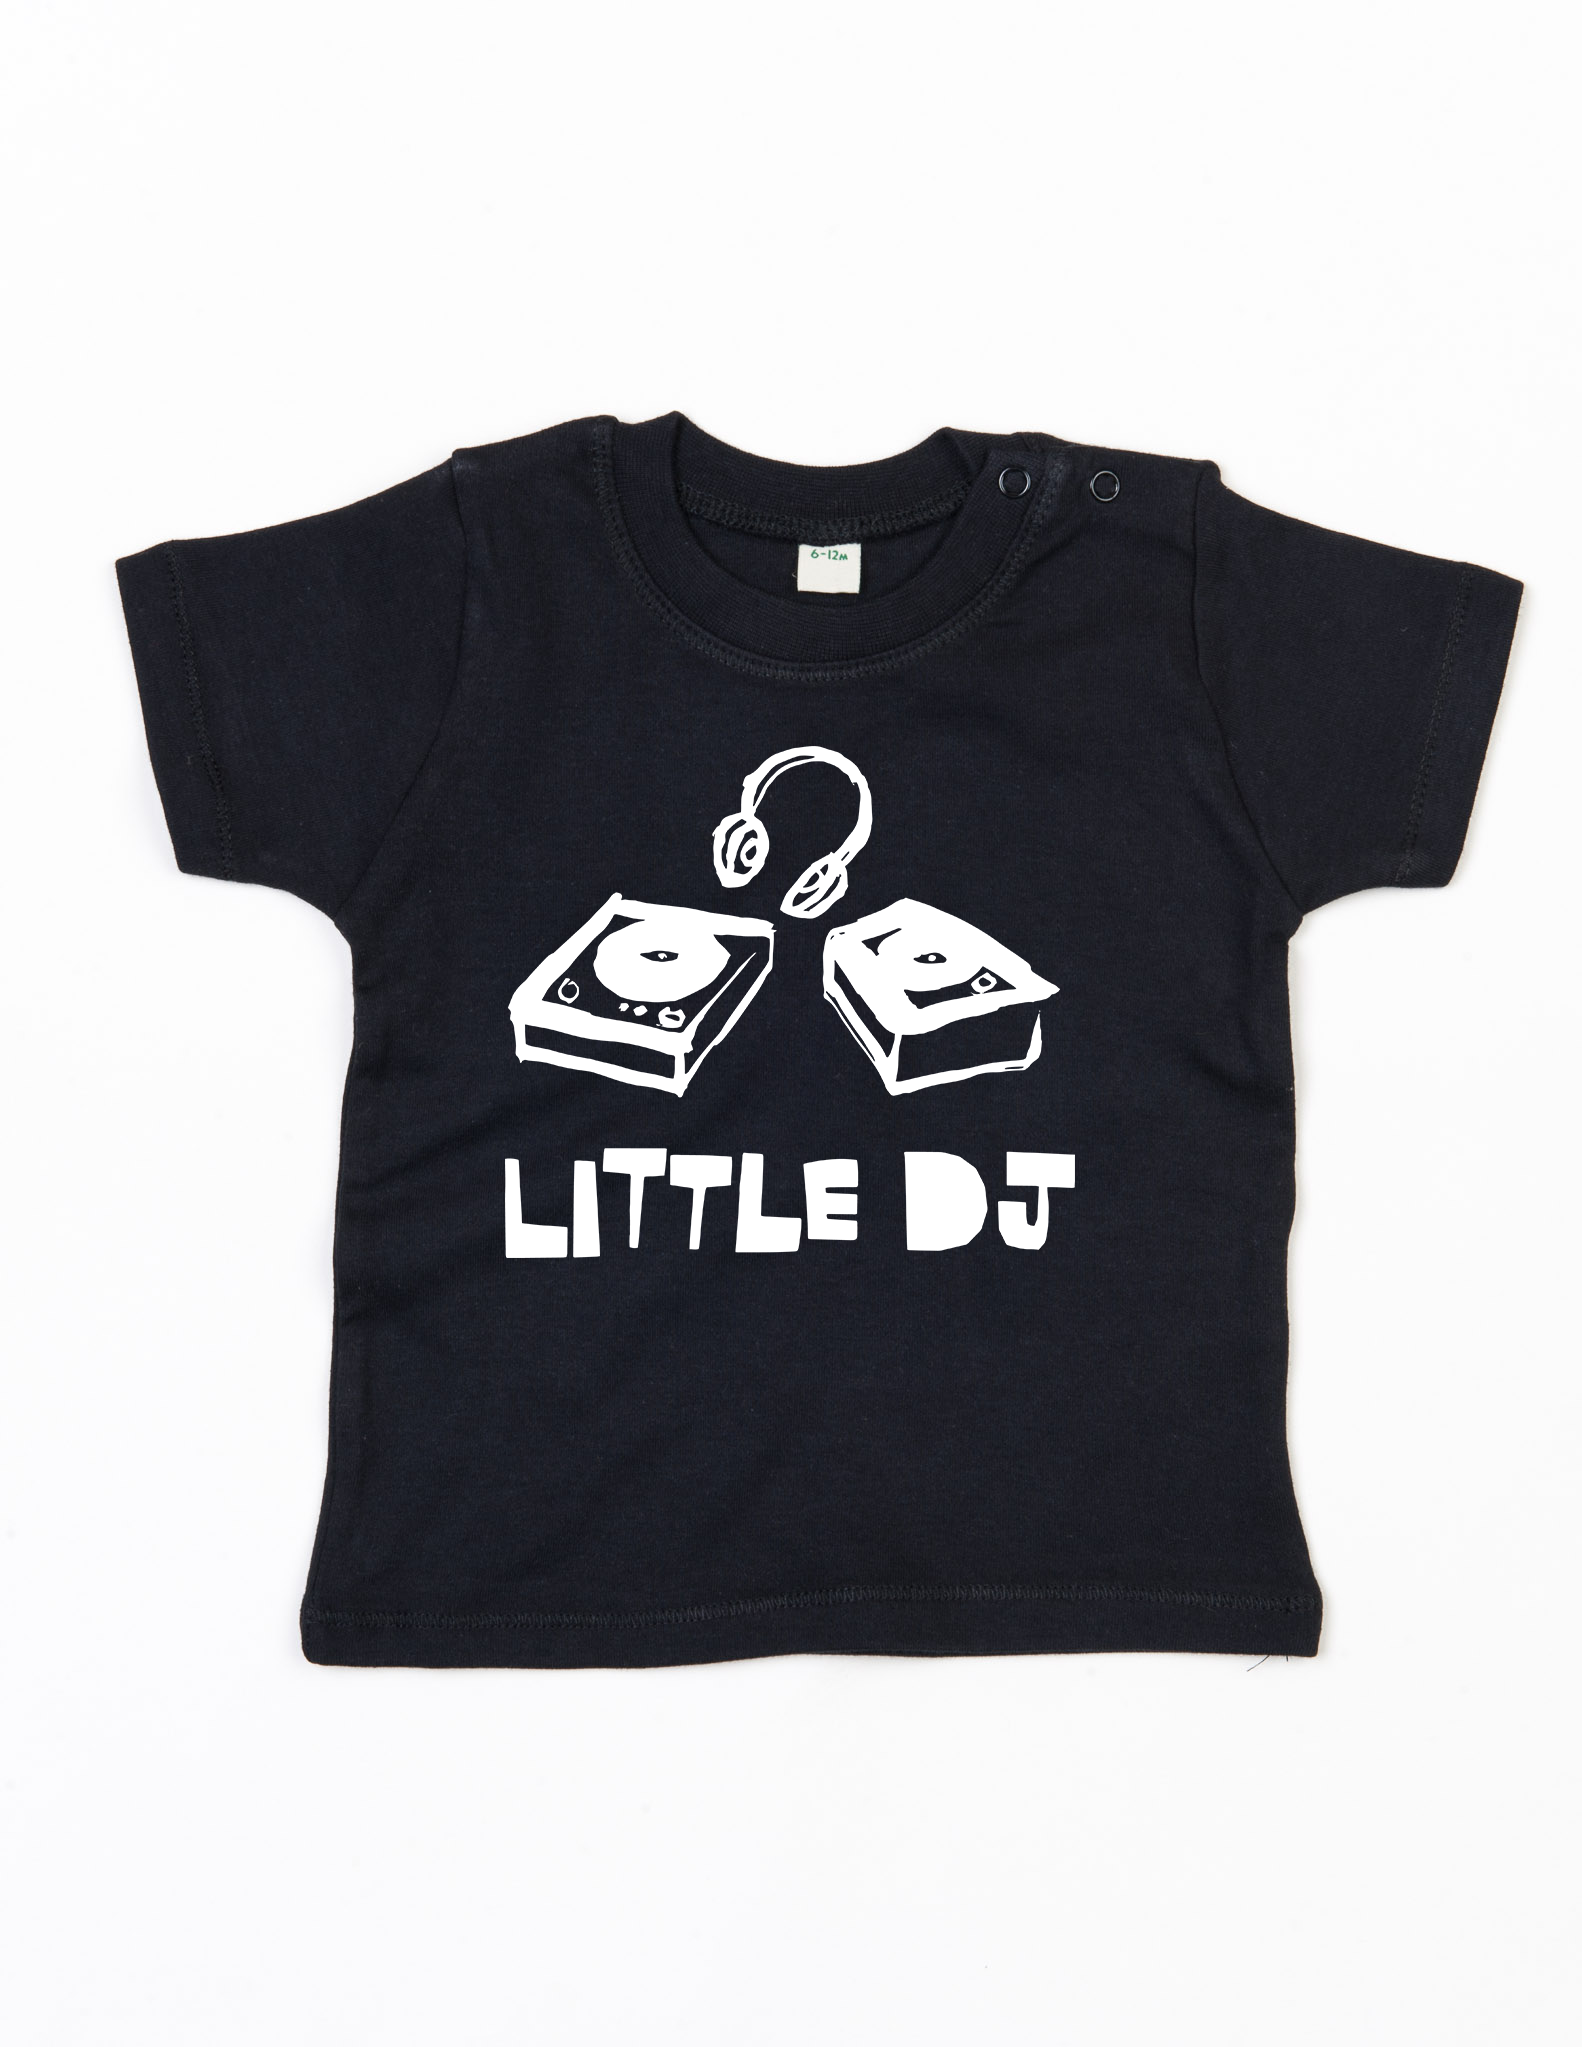 Little DJ' Organic Baby T-shirt